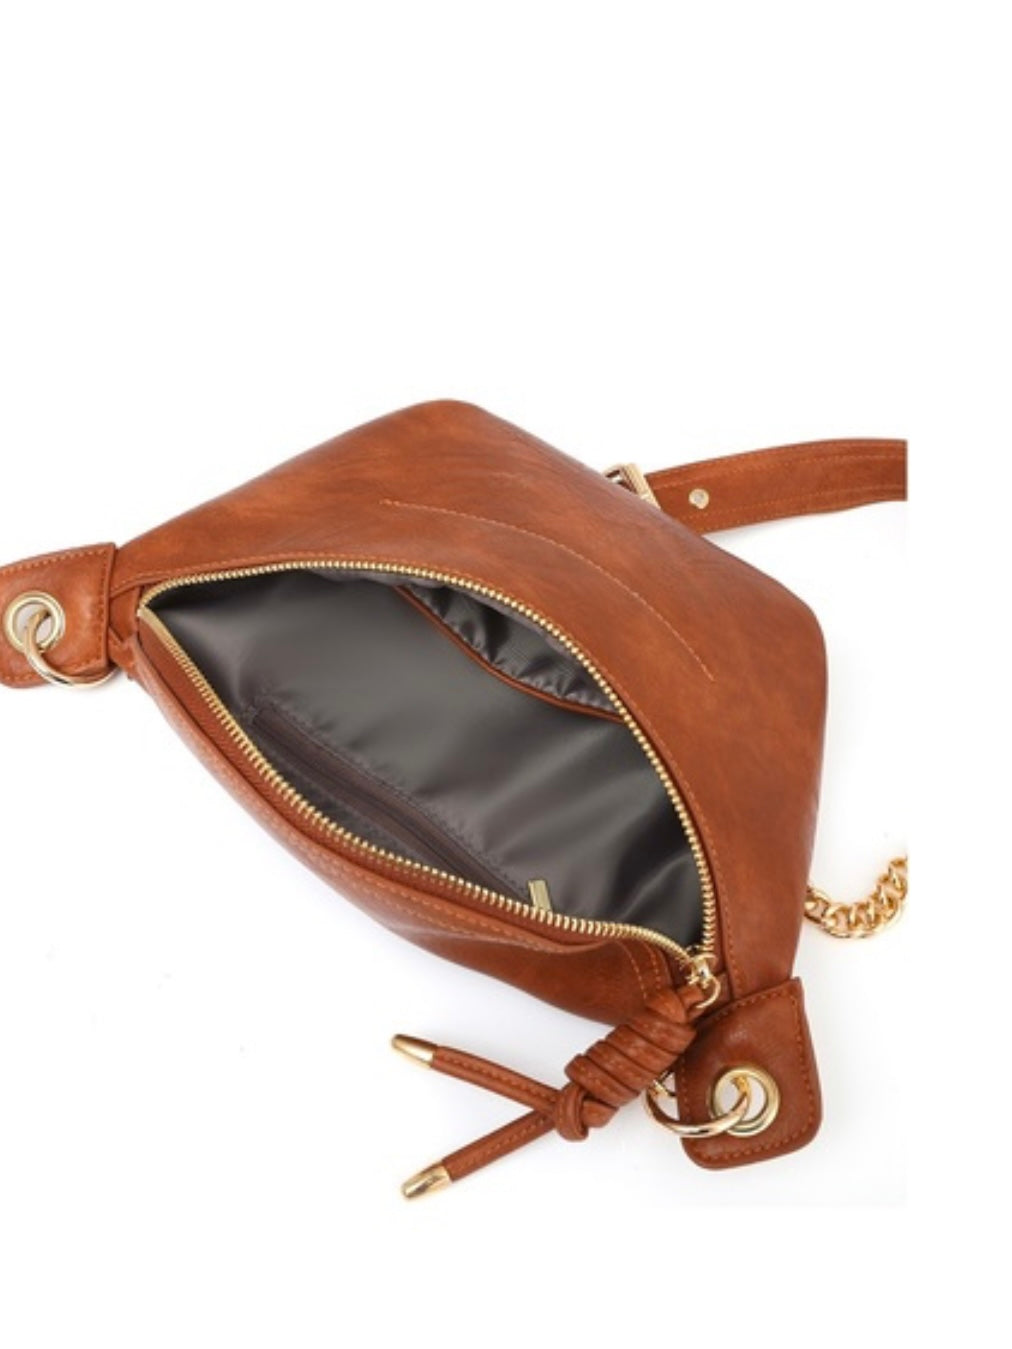 Vegan Leather Convertible Sling Belt Bum Bag in Camel